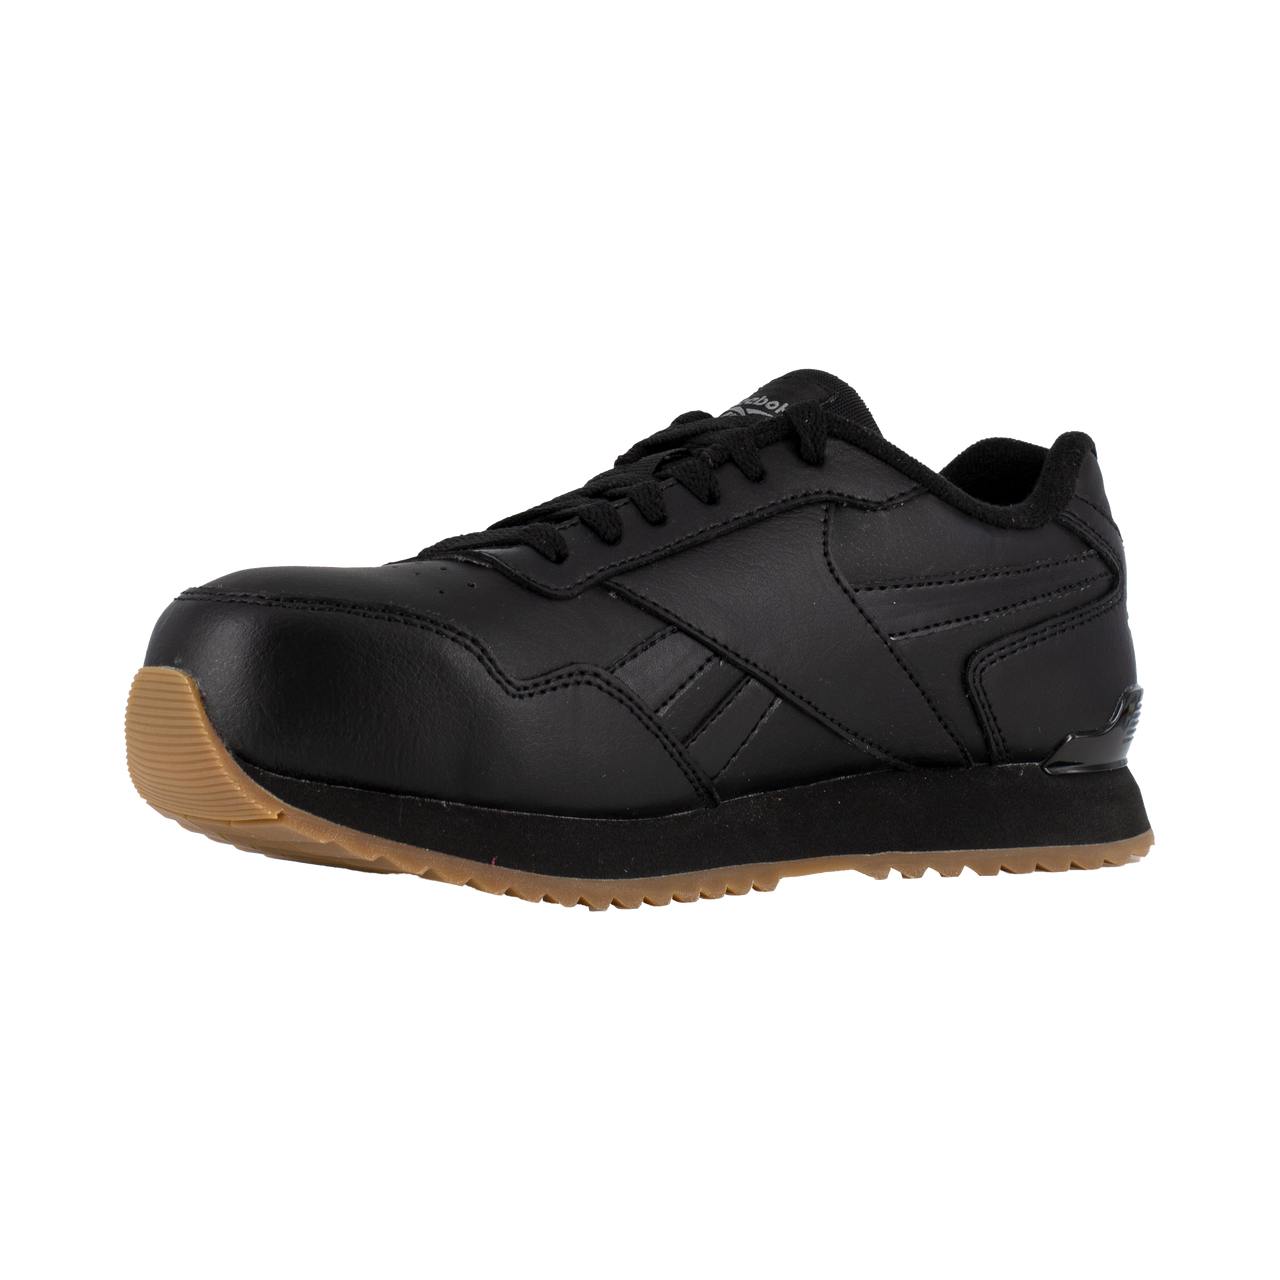 RB983 Reebok Leather Composite Toe Work Sneaker (Black)